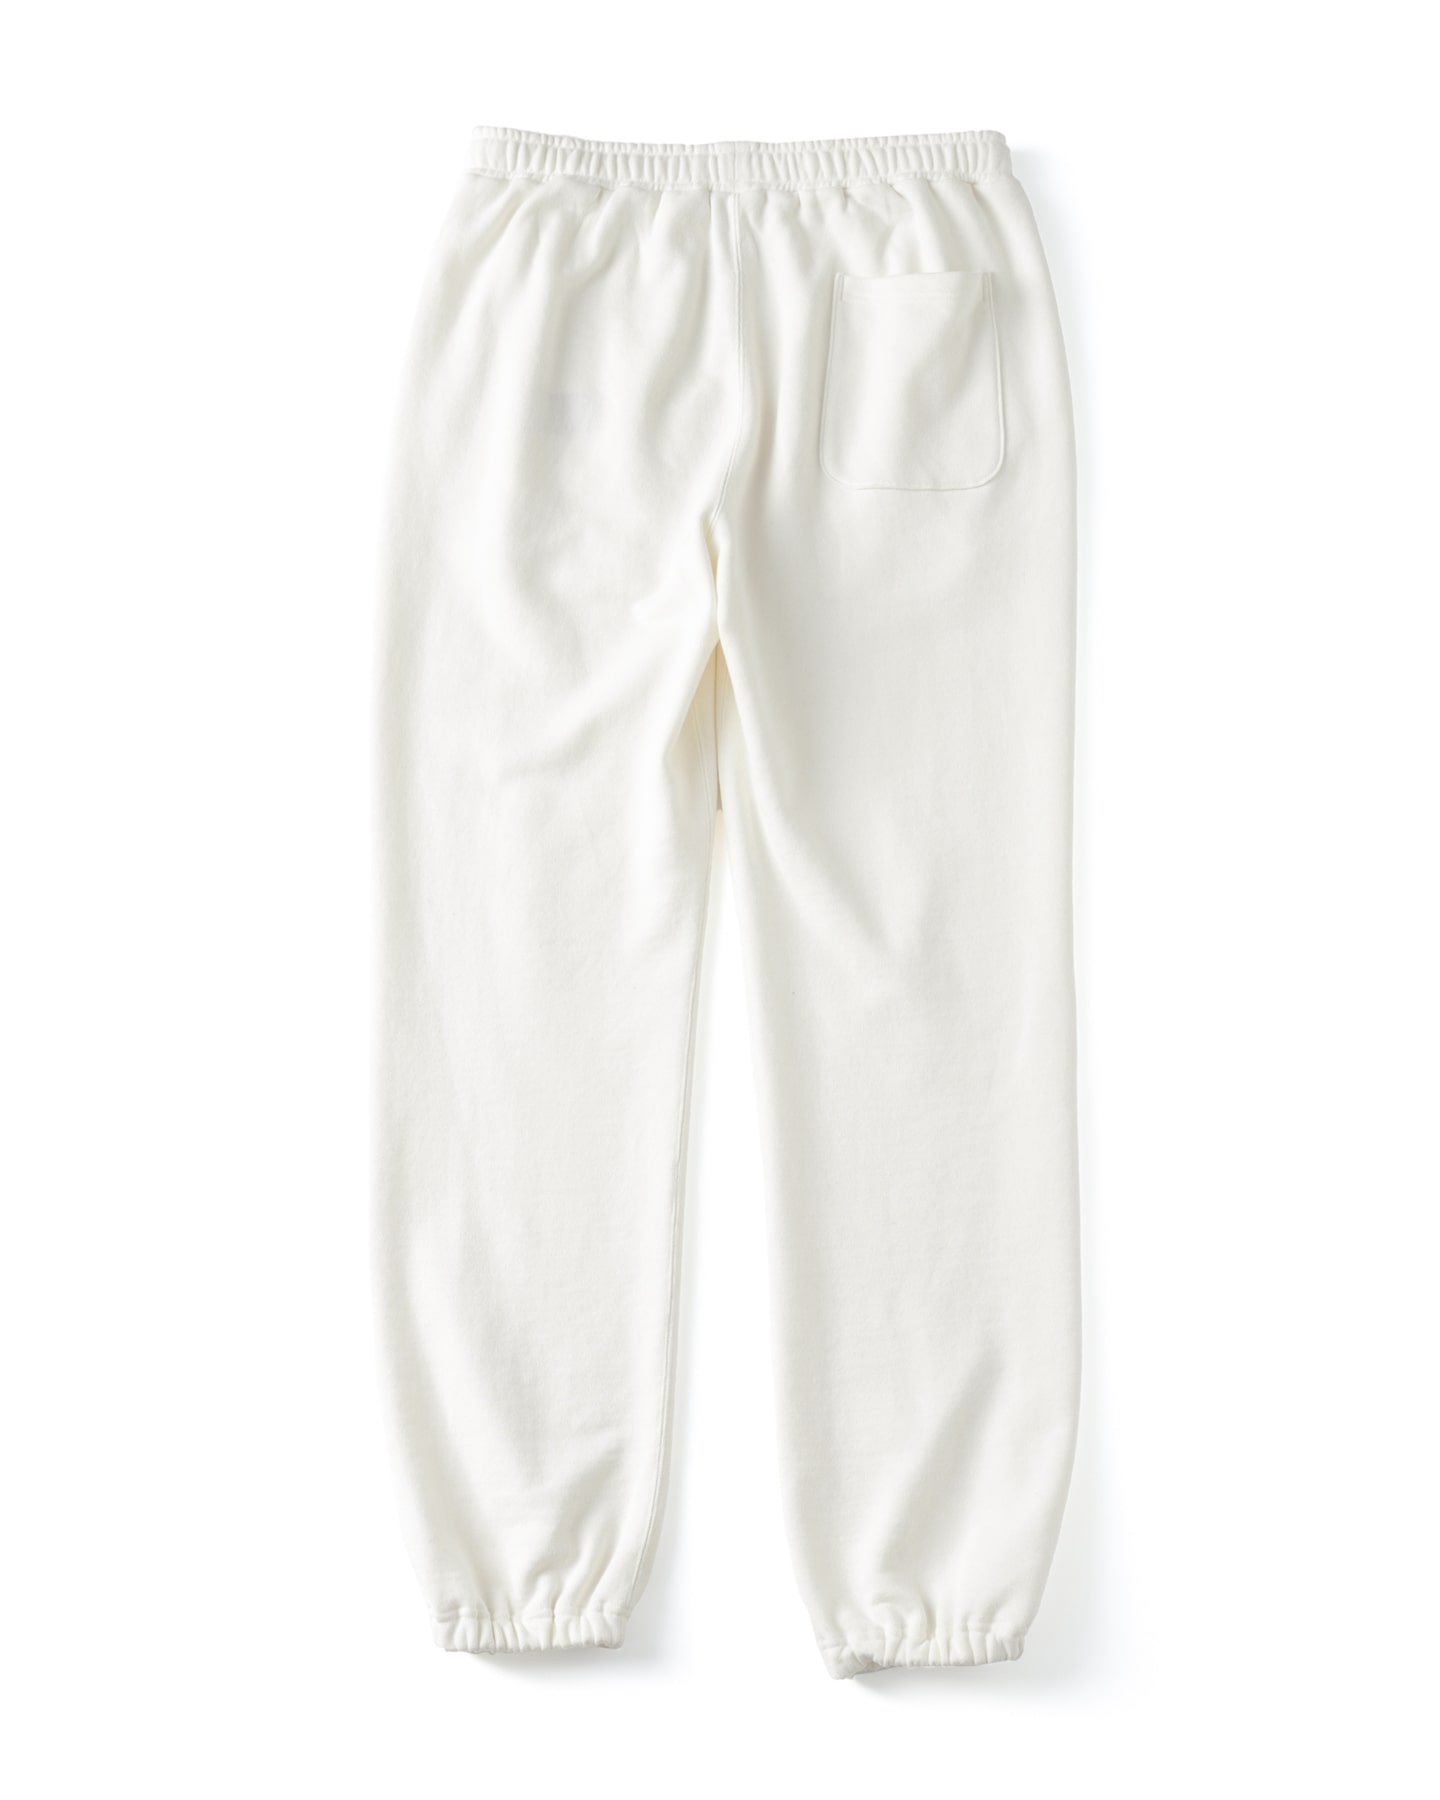 COTTON CASHMERE SWEAT PANTS(M WHITE) - SOPH.